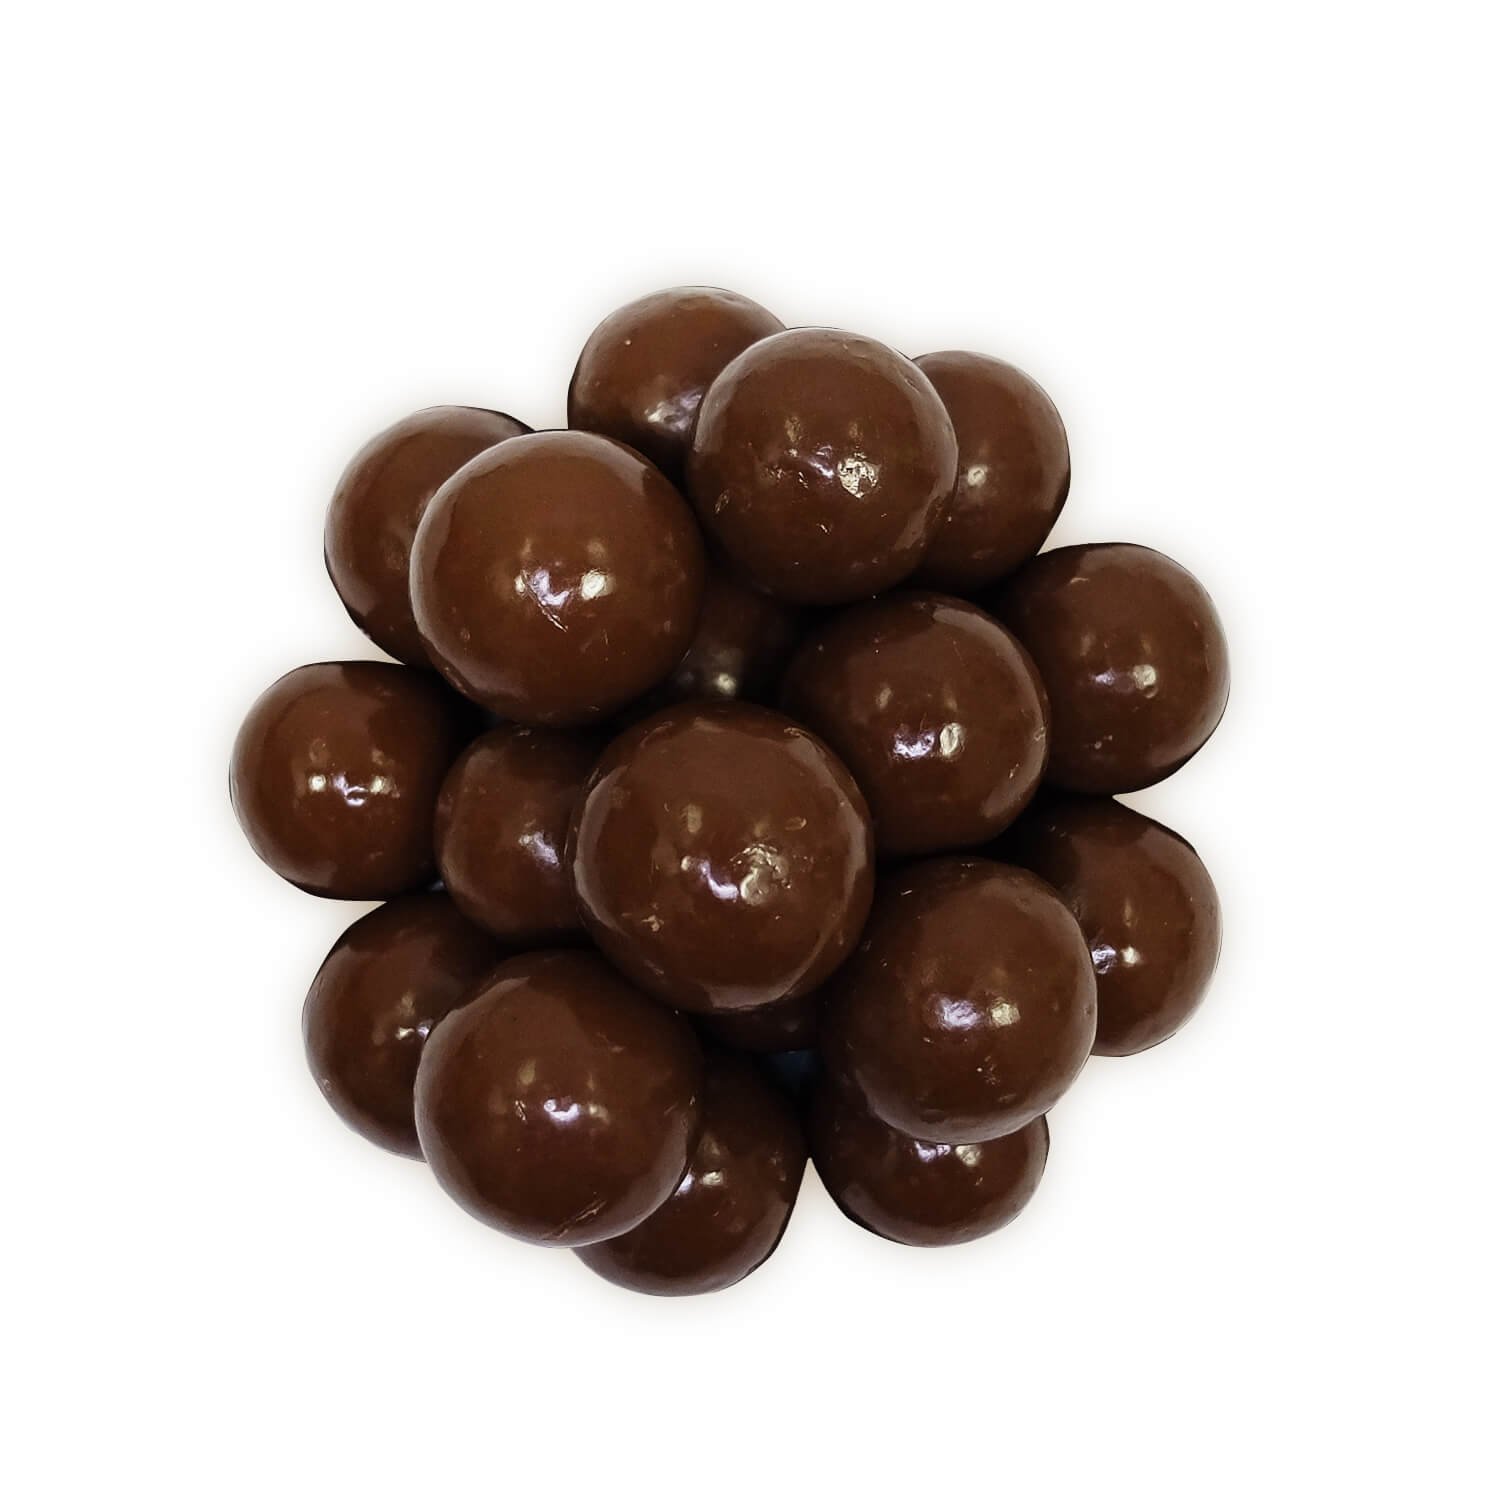 Milk chocolate malt balls